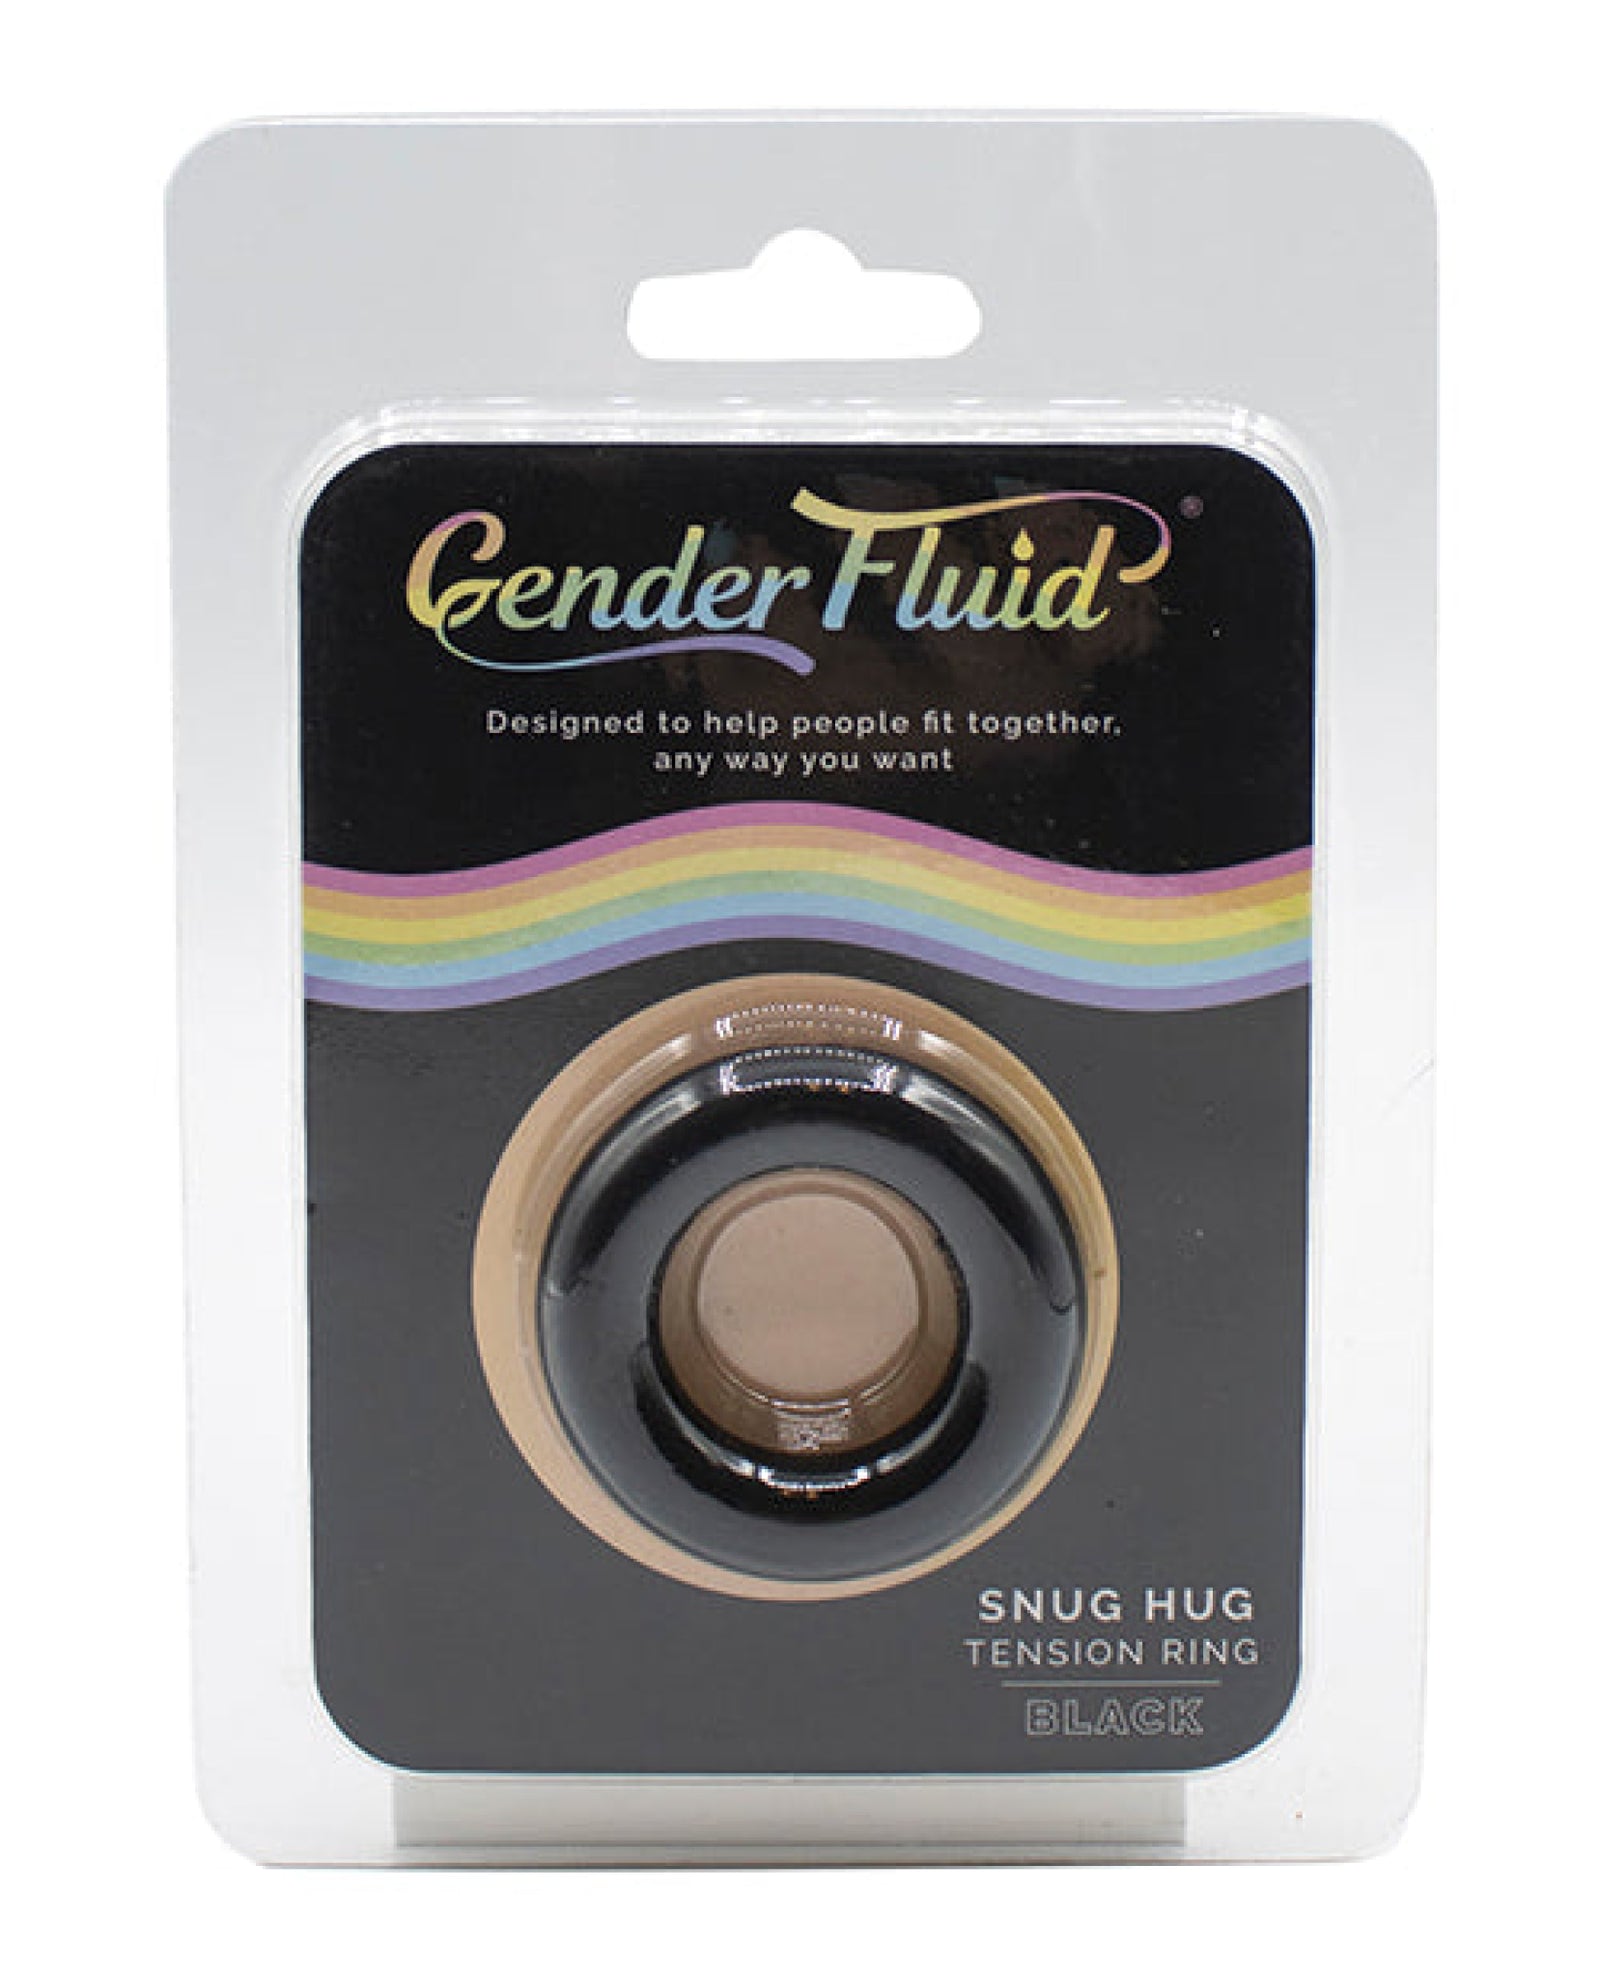 Gender Fluid Snug Hug Tension Ring - Black Gender Fluid